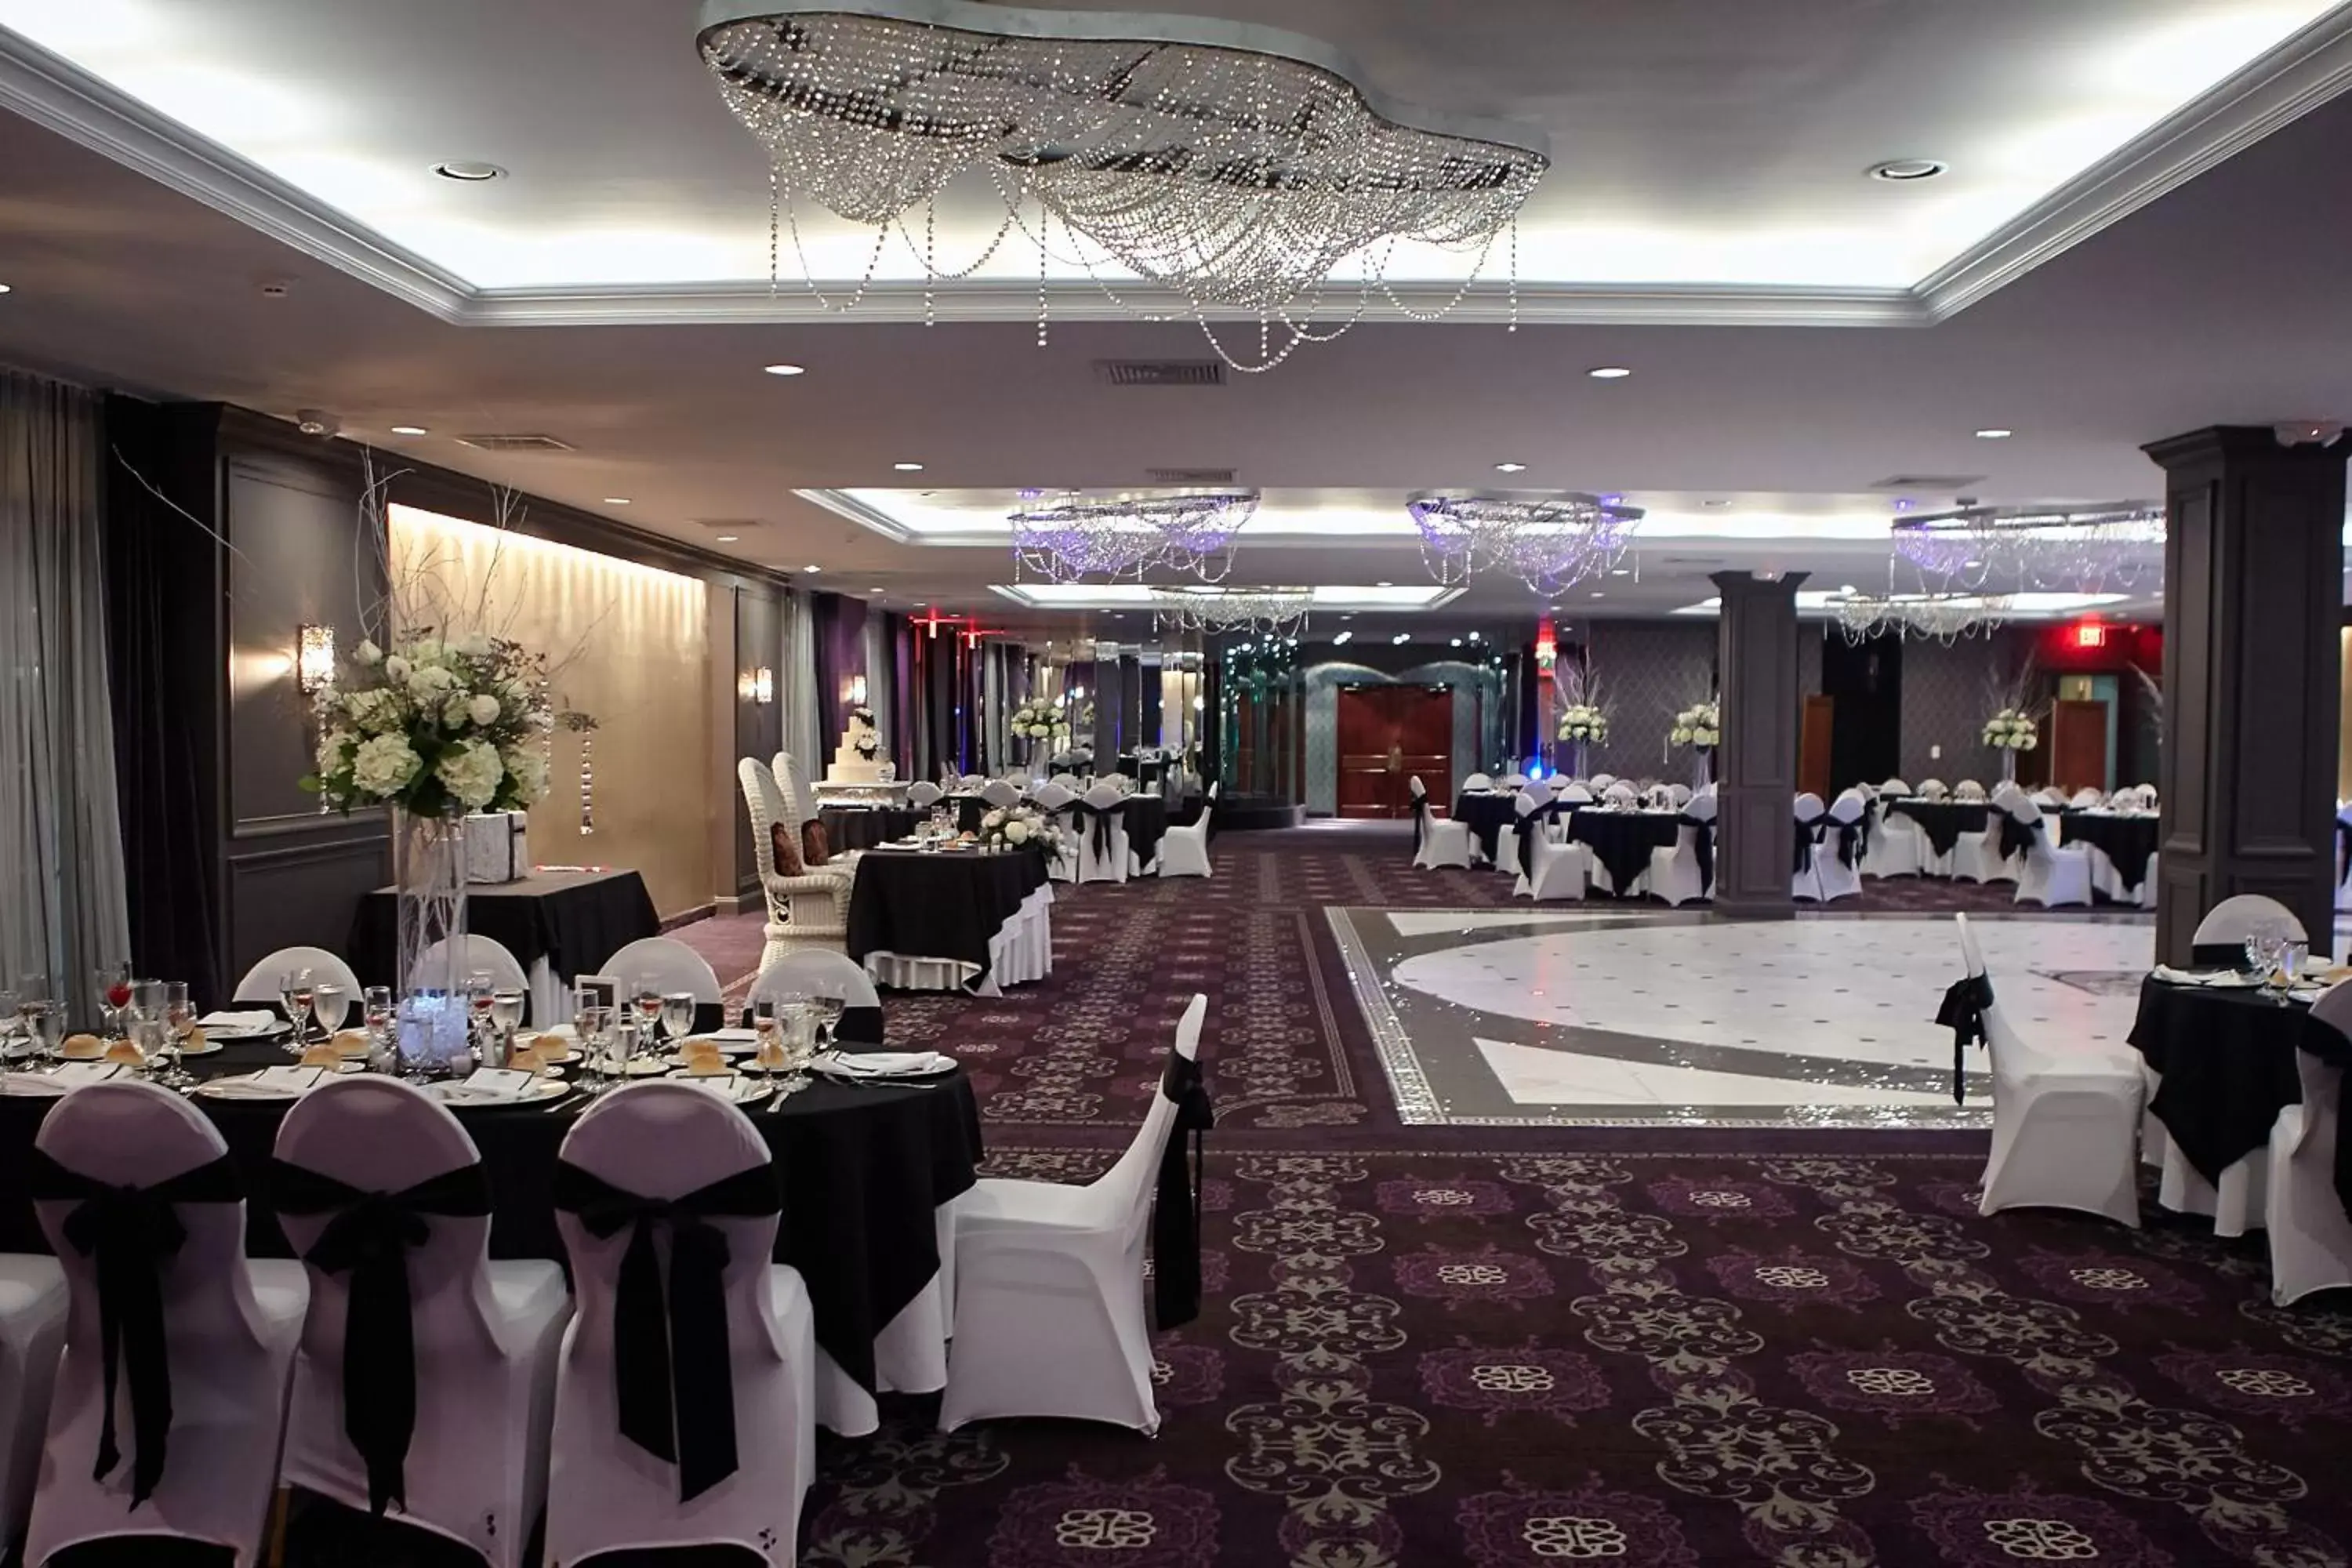 Banquet Facilities in The Royal Regency Hotel